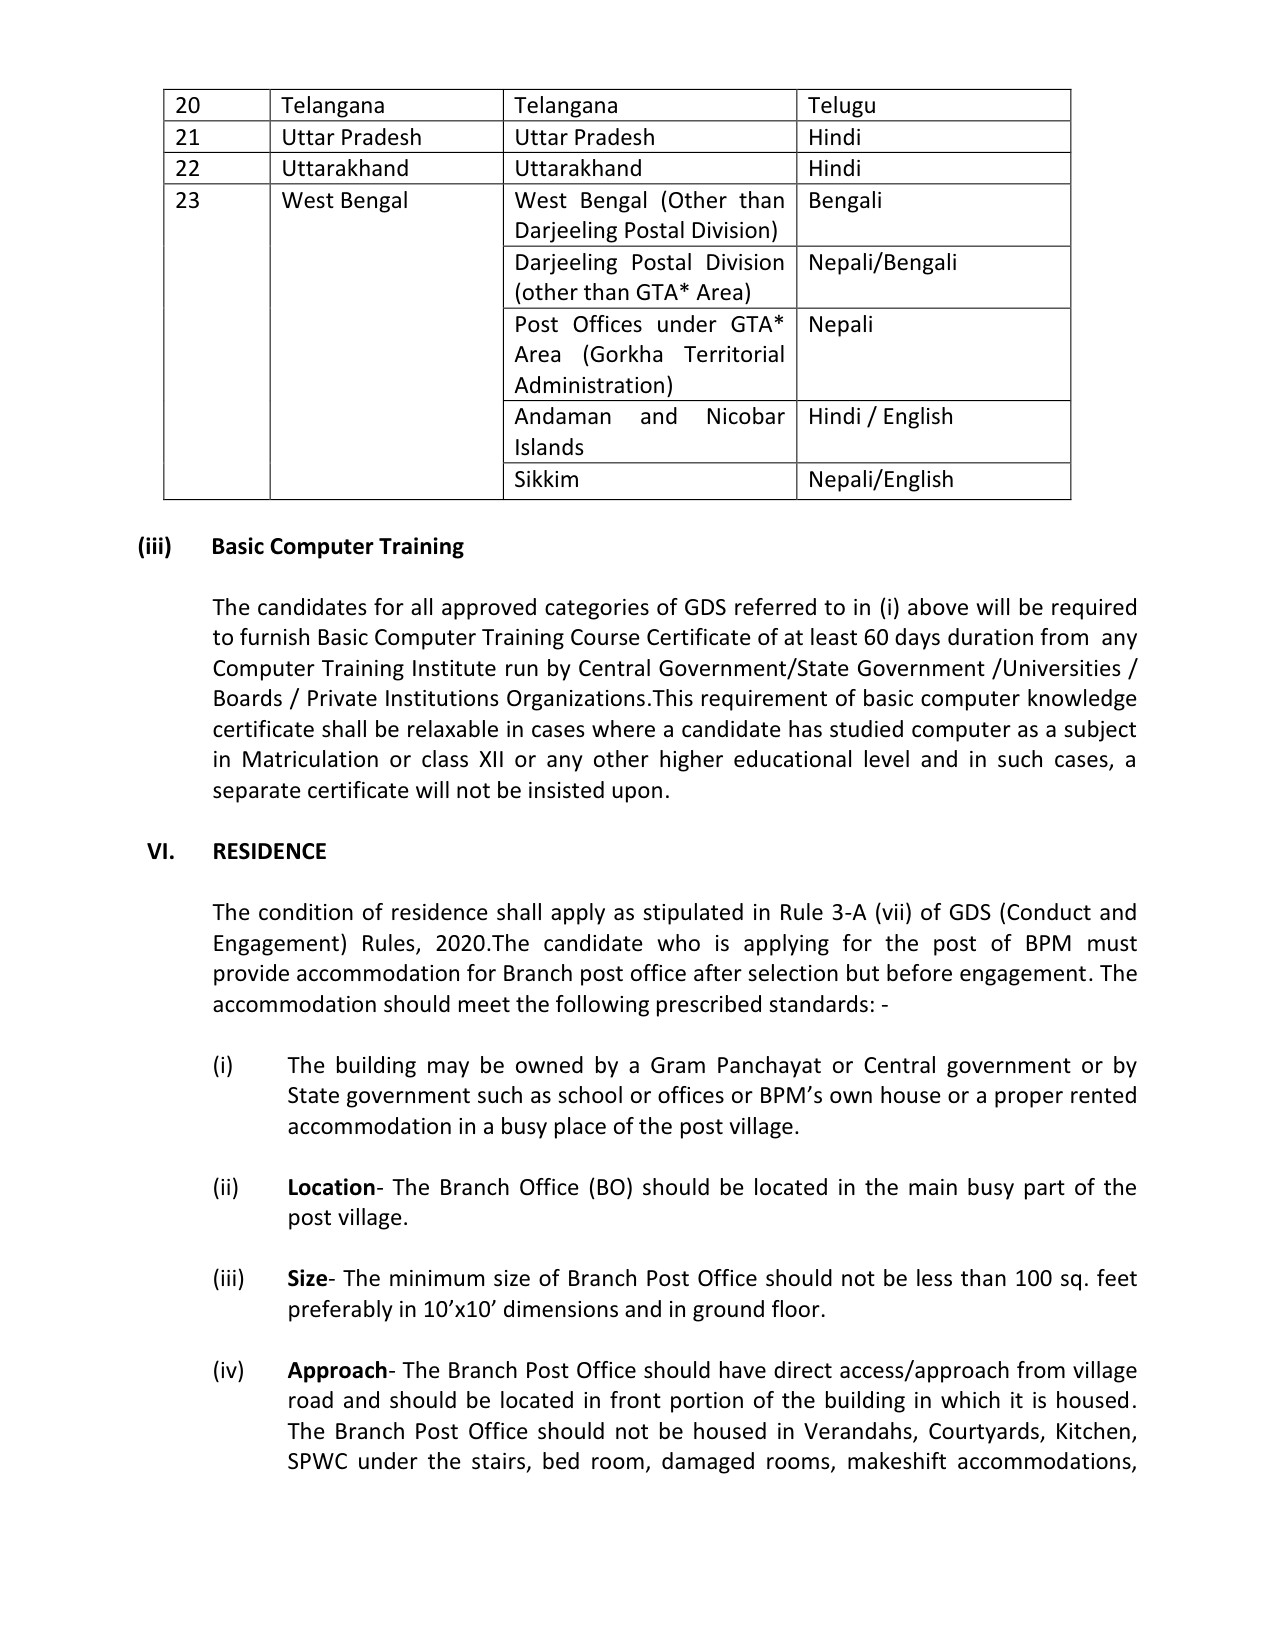 Kerala Postal Circle GDS Recruitment 2021 notification - Notification Image 5